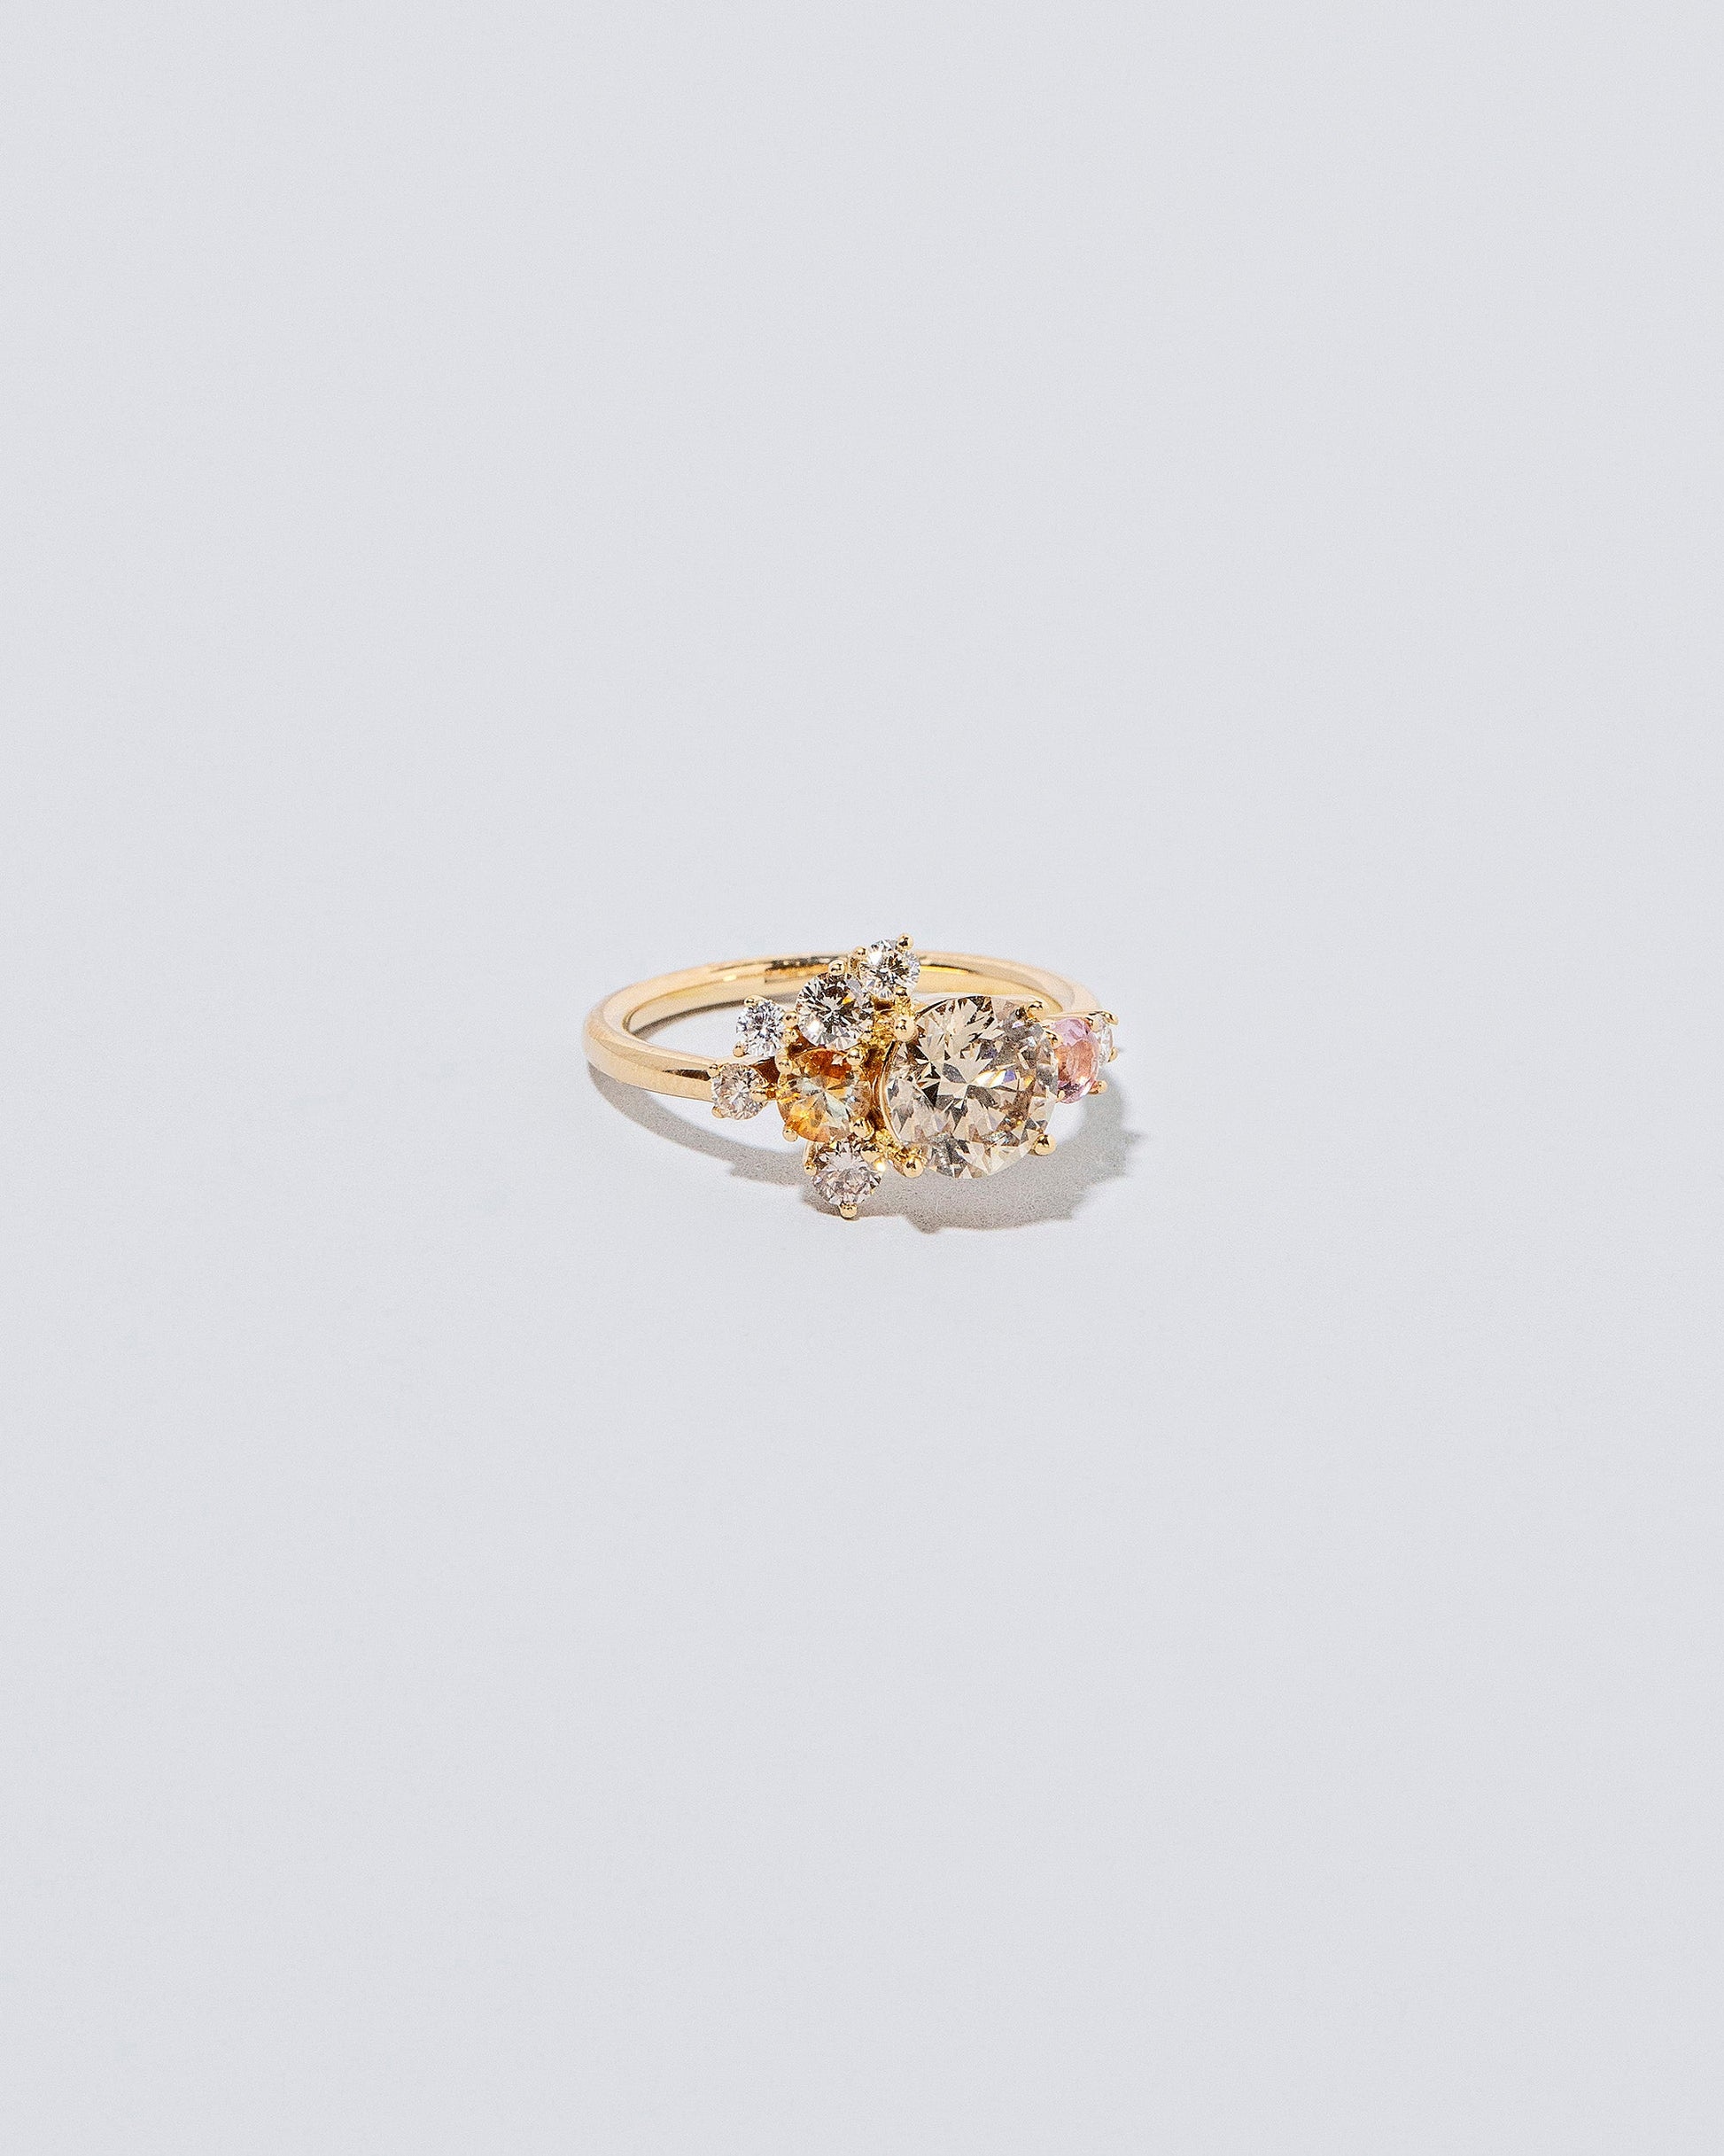 Vega Ring - Champagne Diamond on light color background.